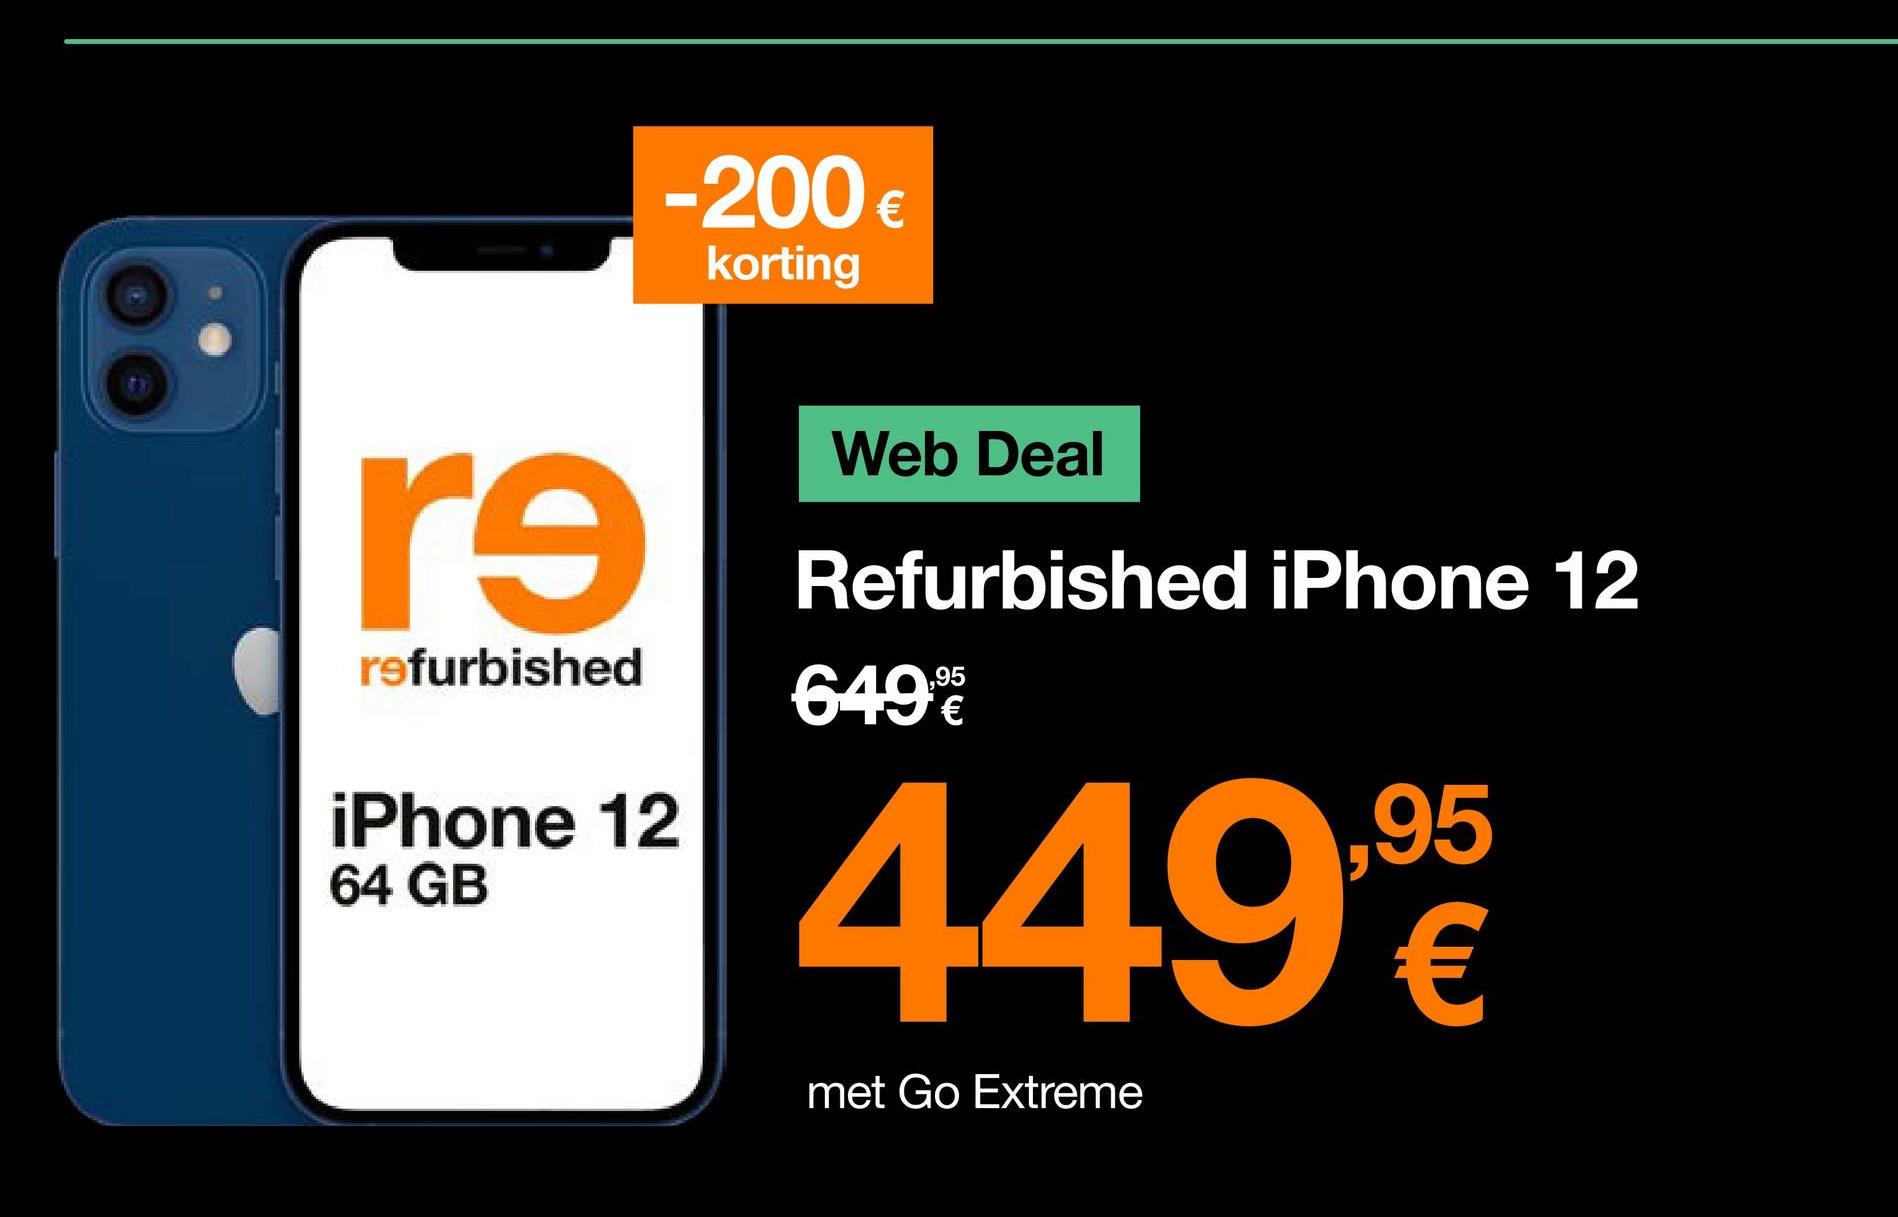 r9
refurbished
-200 €
korting
iPhone 12
64 GB
Web Deal
Refurbished iPhone 12
649%
449,90
€
met Go Extreme